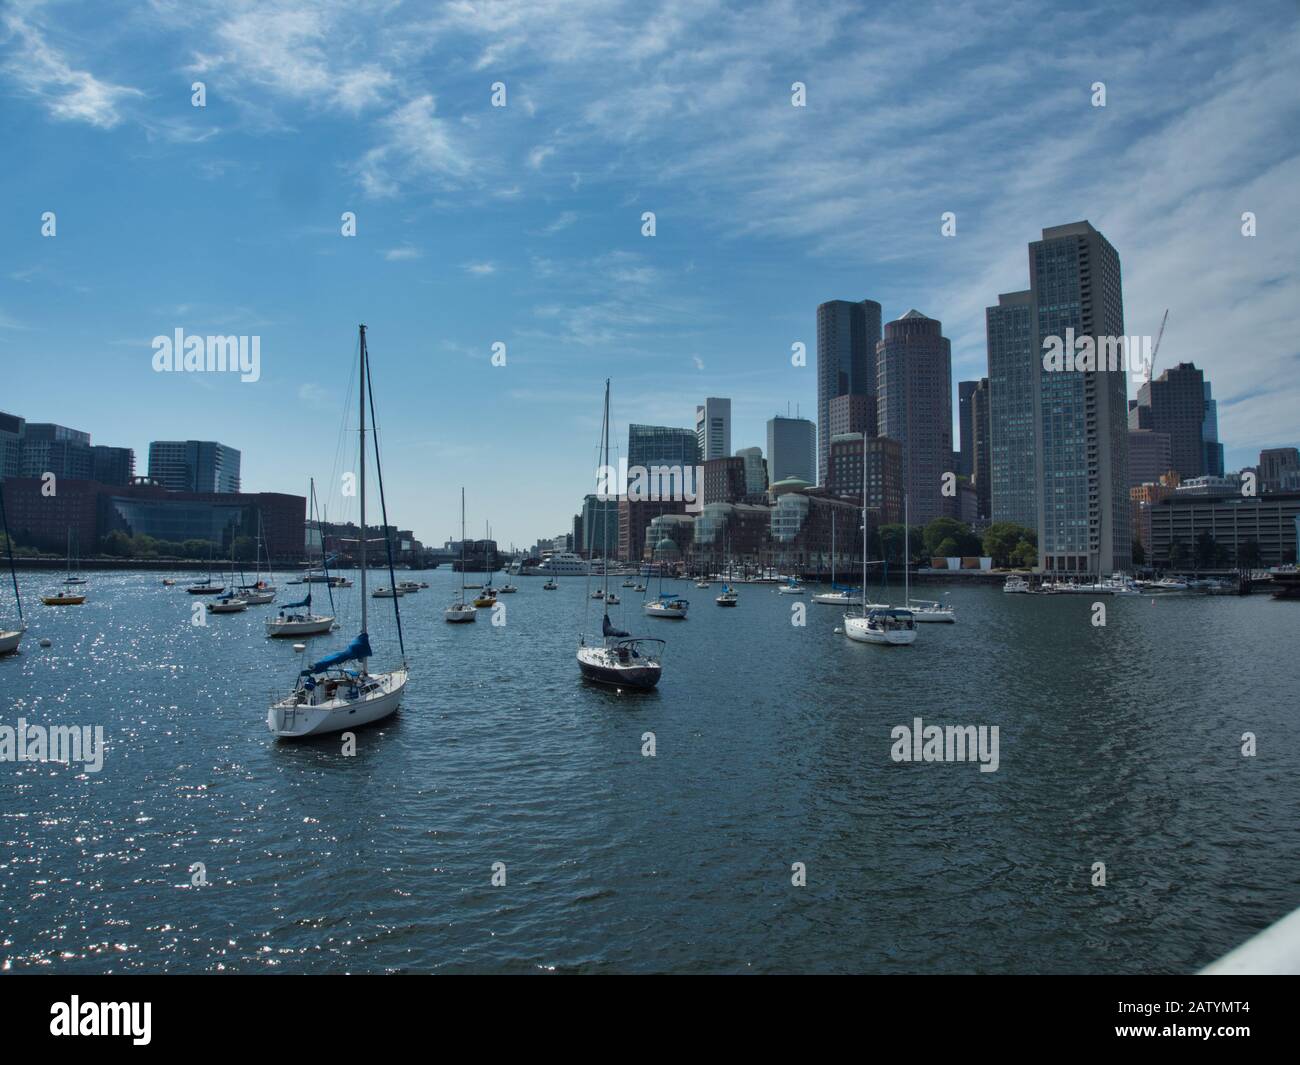 Boston Massachusetts harbor and city skyline over water with sailboats Stock Photo